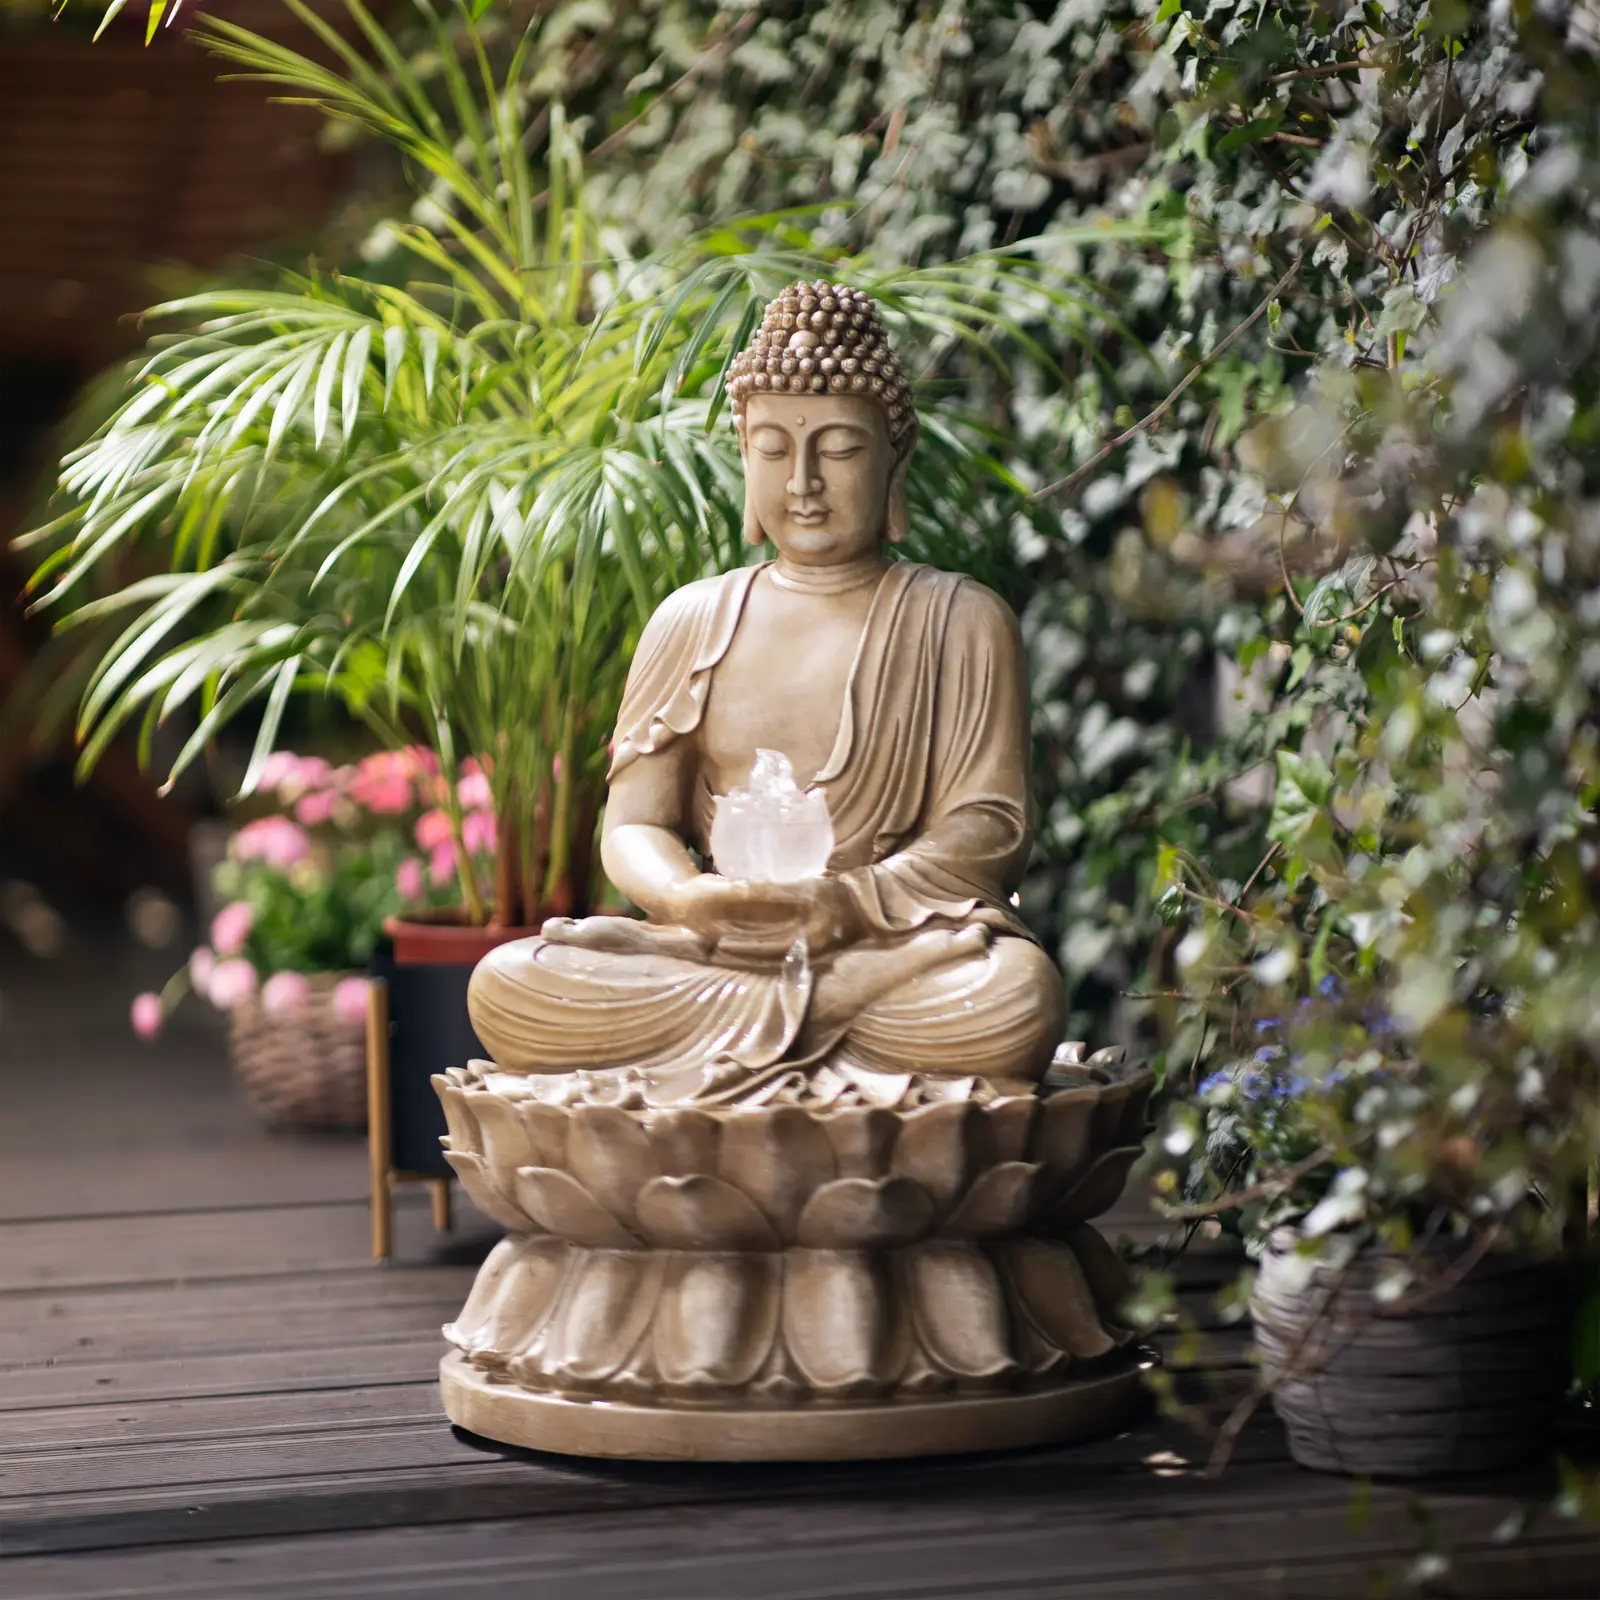 Solar Garden Fountain - Sittende Buddha-figur - LED-belysning